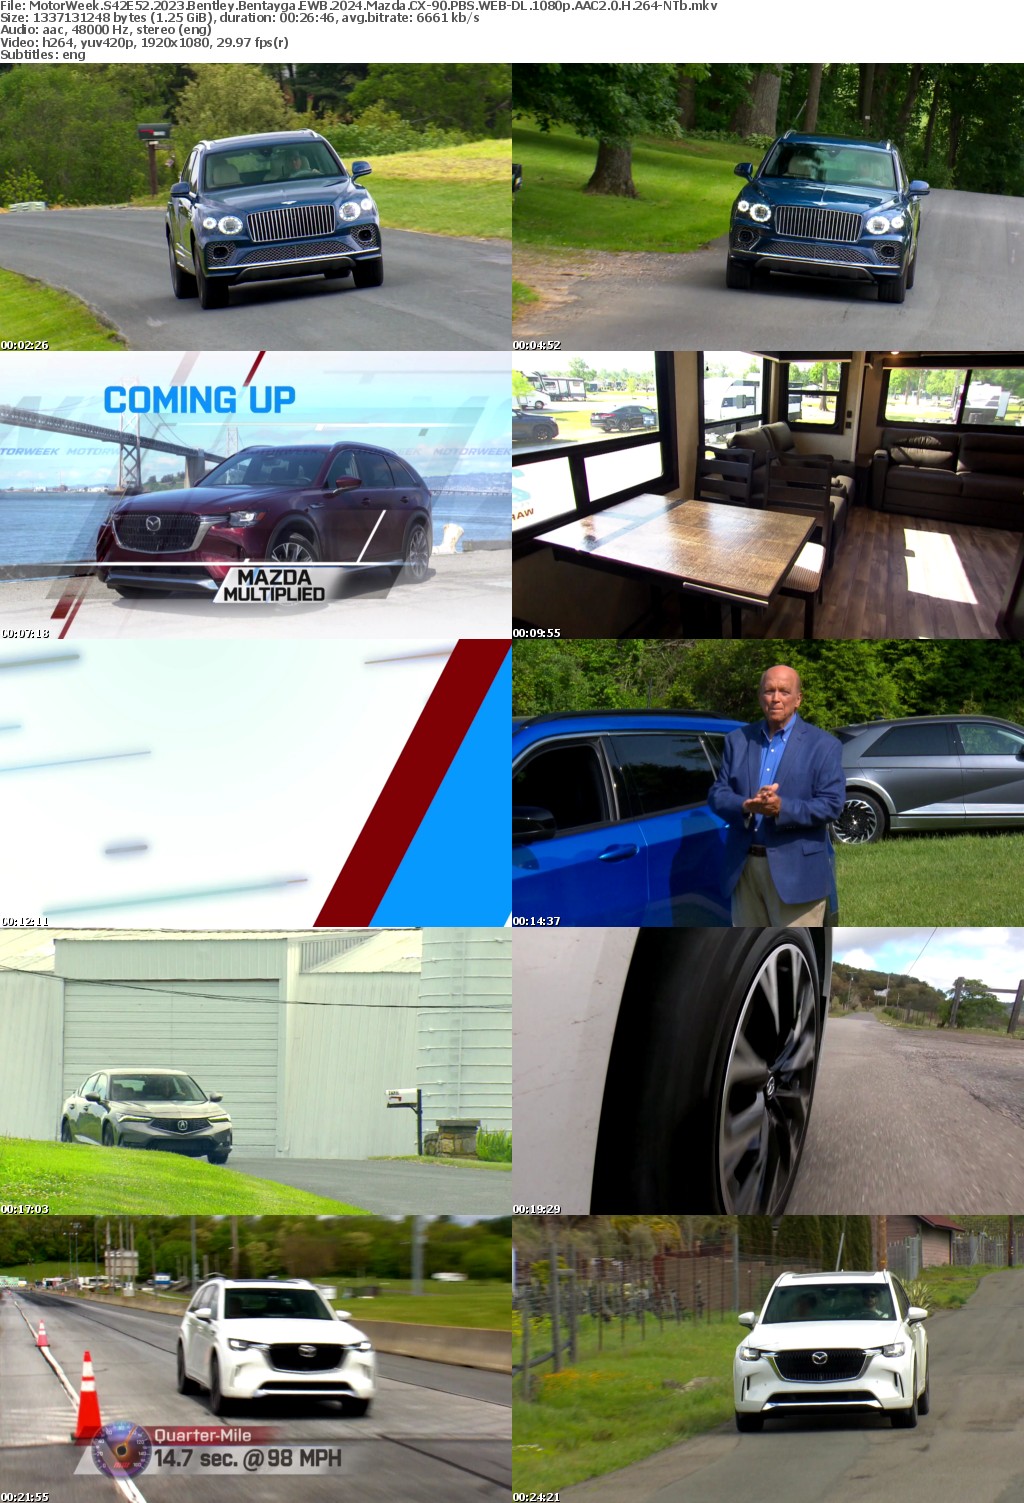 MotorWeek S42E52 2023 Bentley Bentayga EWB 2024 Mazda CX-90 PBS WEB-DL 1080p AAC2 0 H 264-NTb